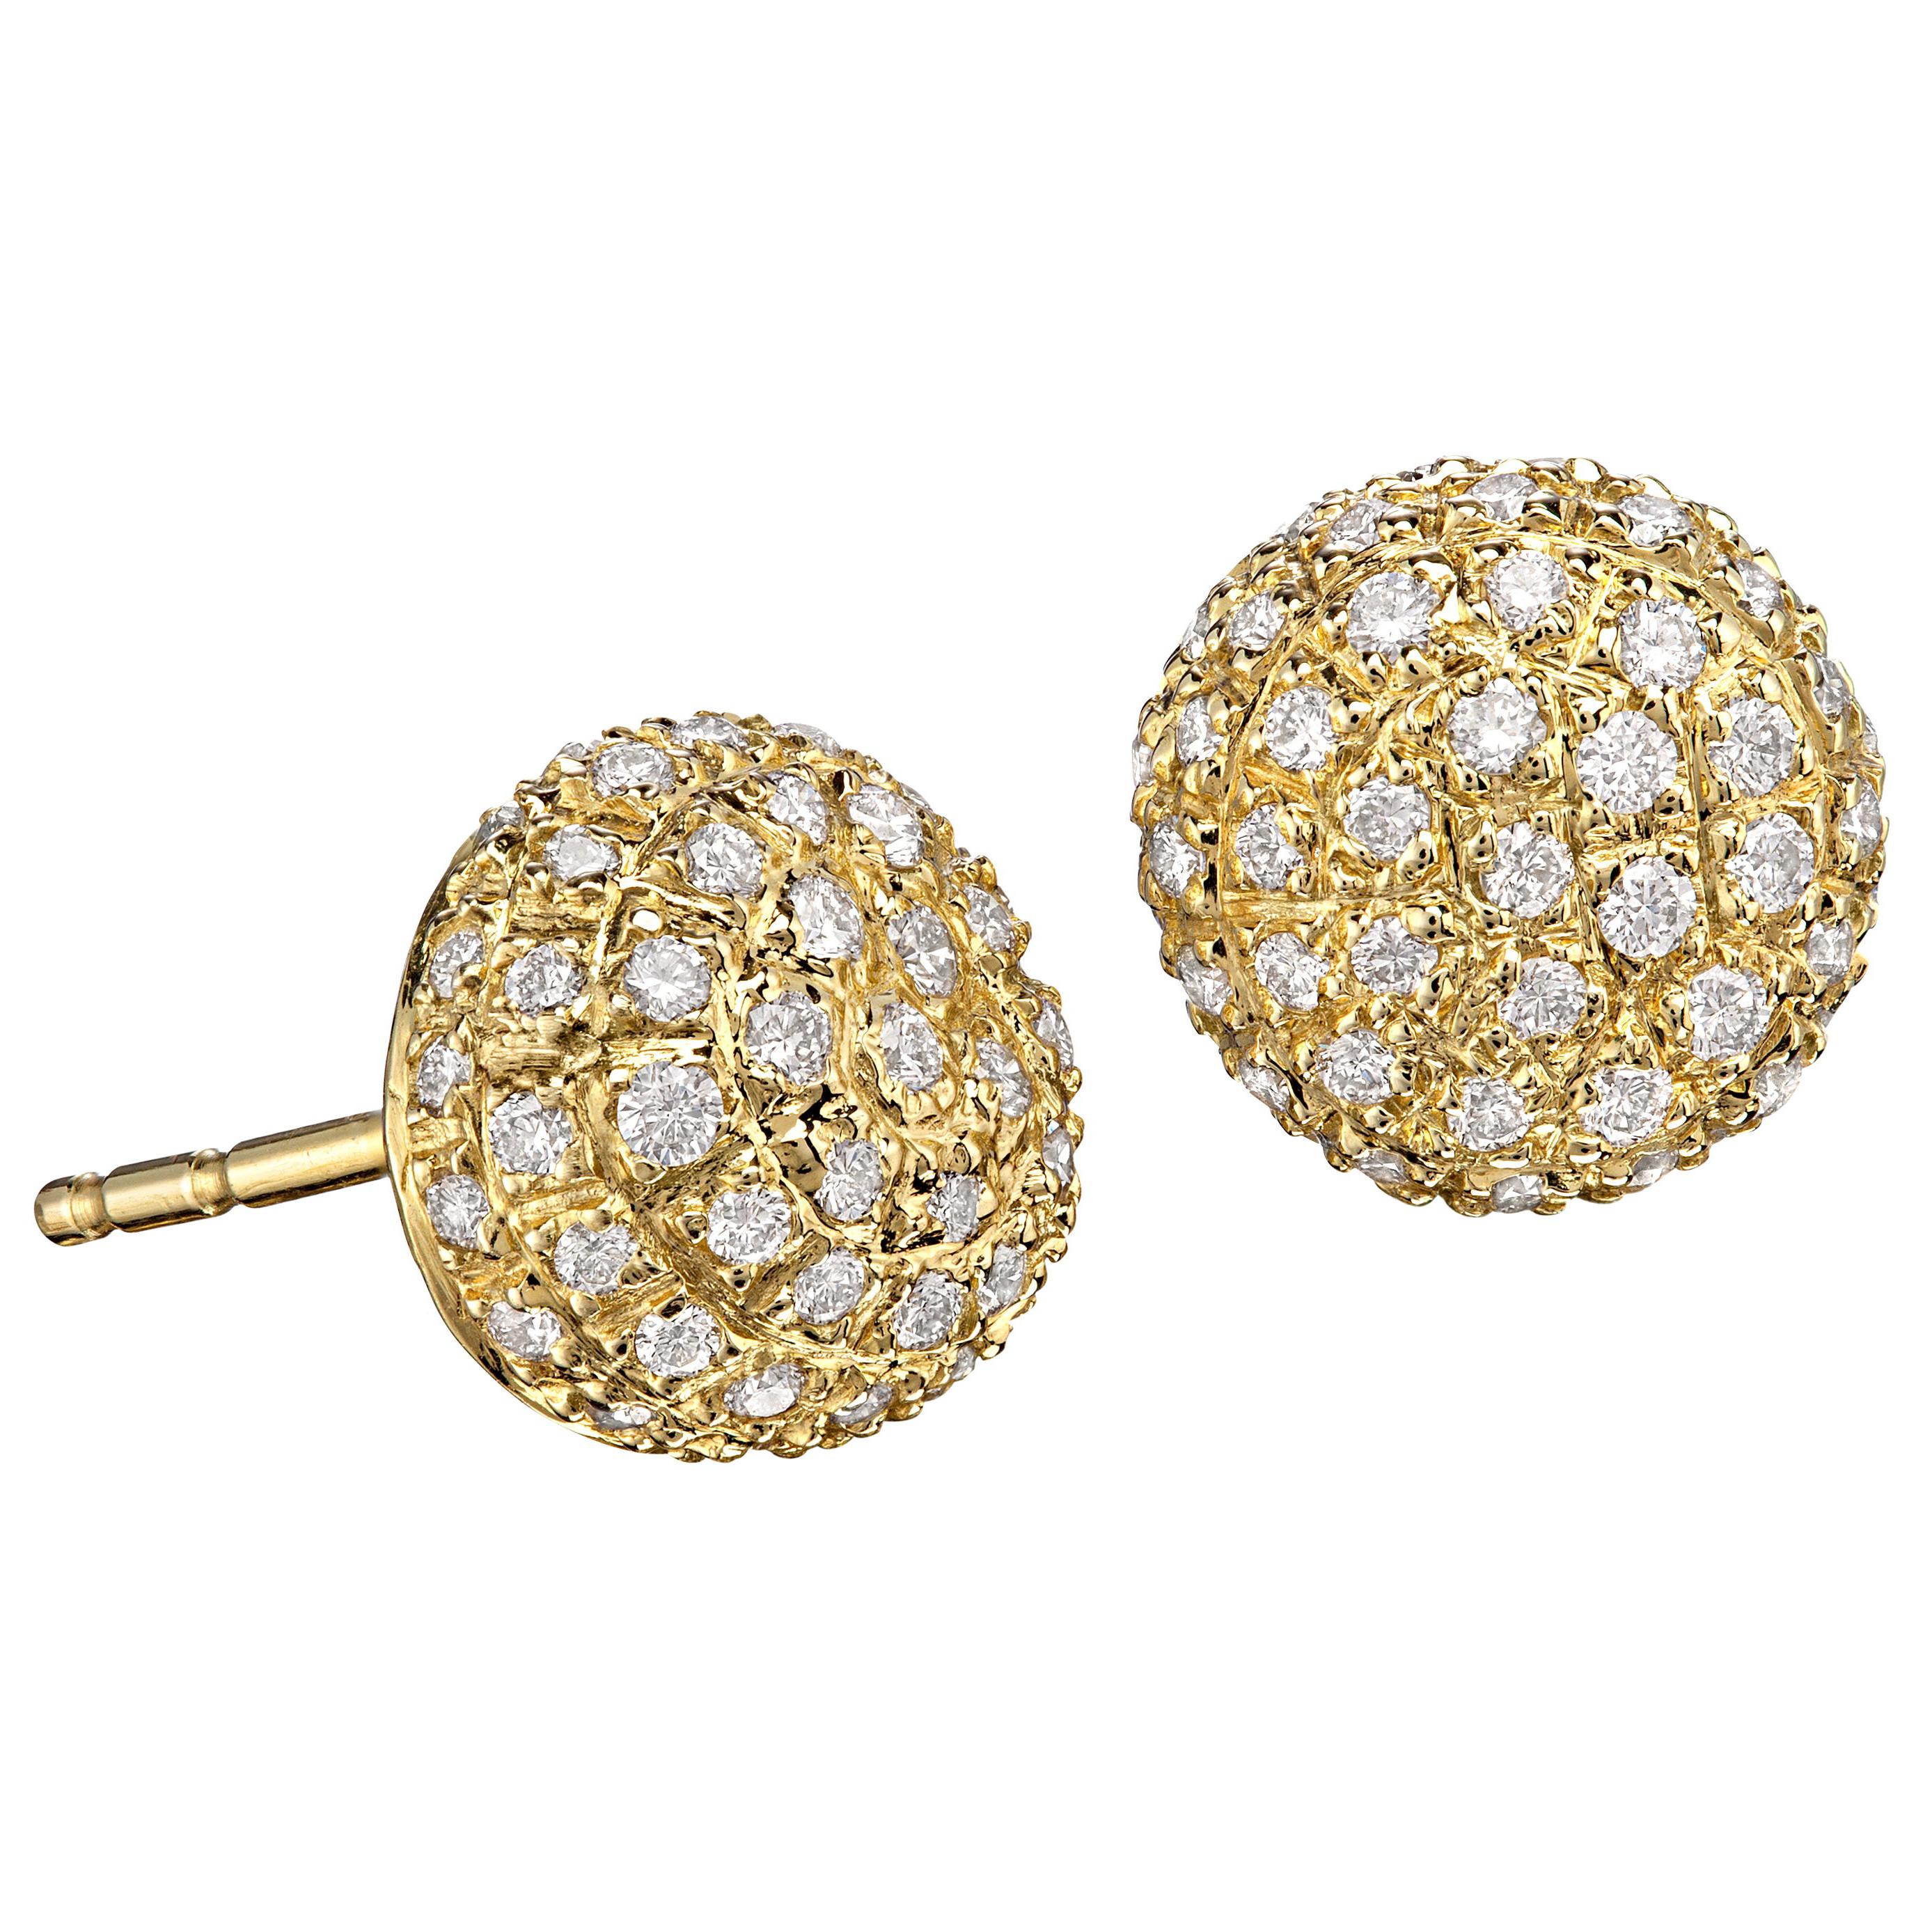 Contemporary Round Brilliant White Diamond Gold Stud Earrings, John Iversen 2019